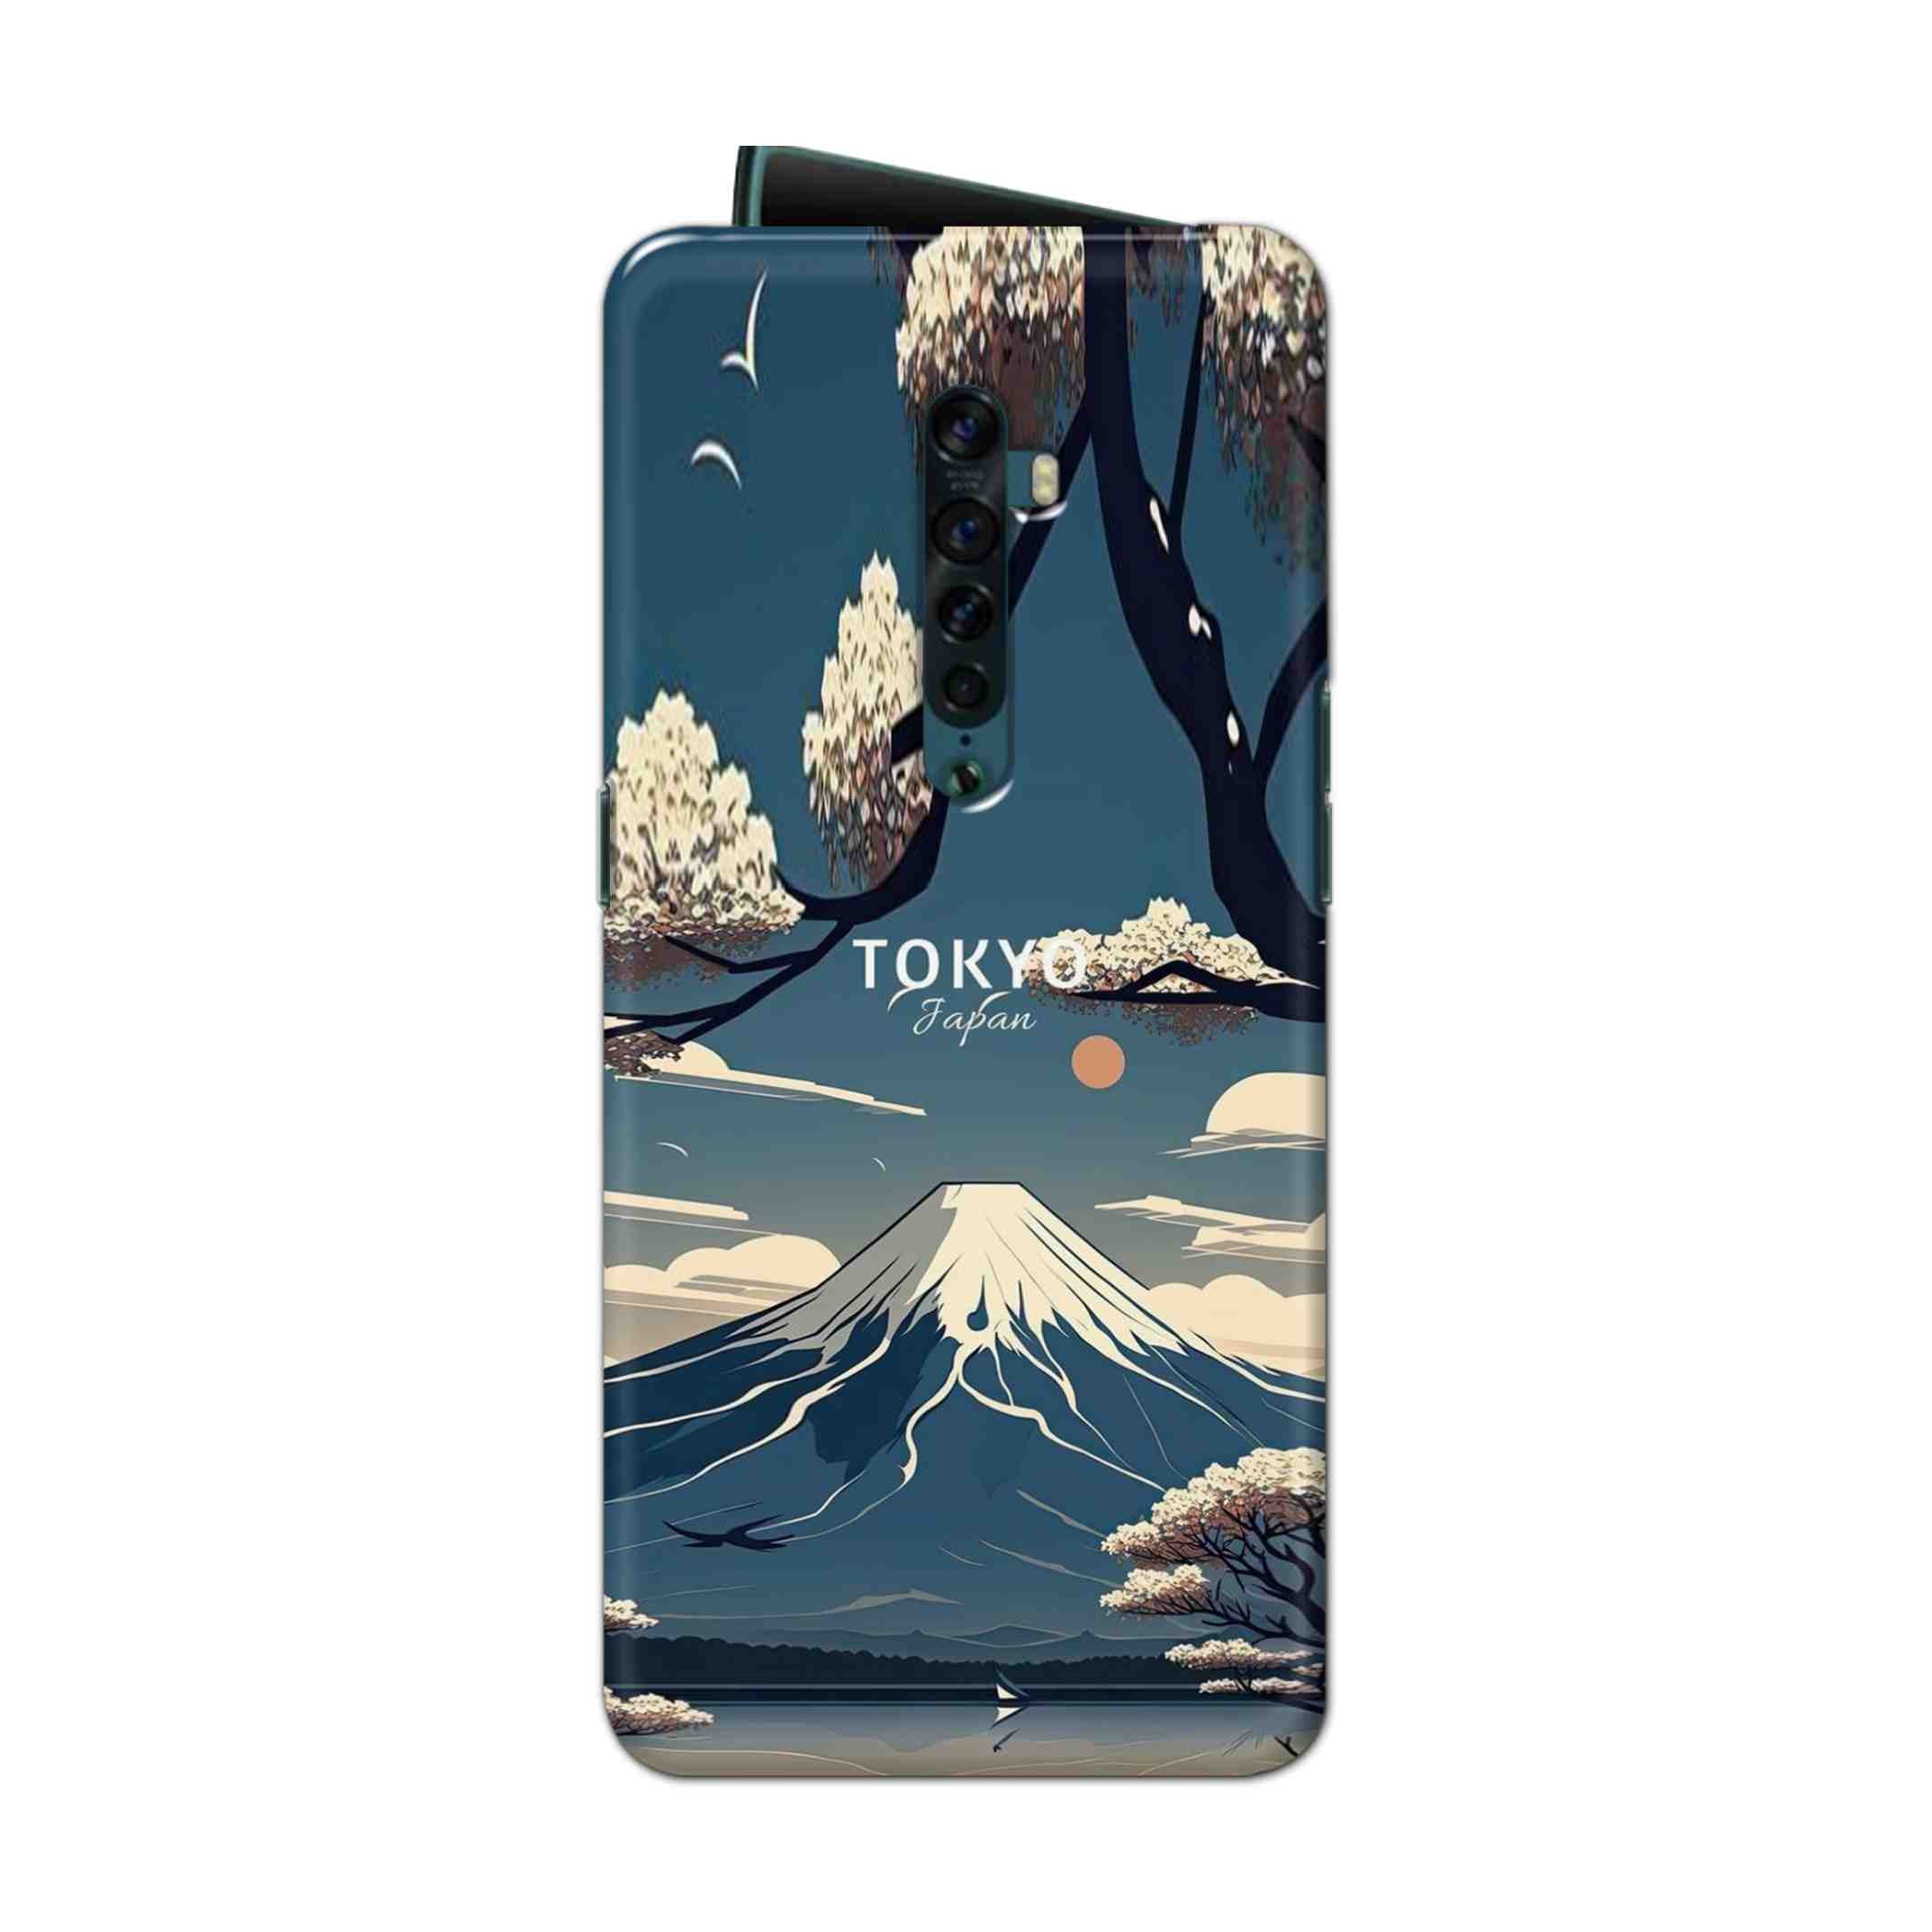 Buy Tokyo Hard Back Mobile Phone Case Cover For Oppo Reno 2 Online